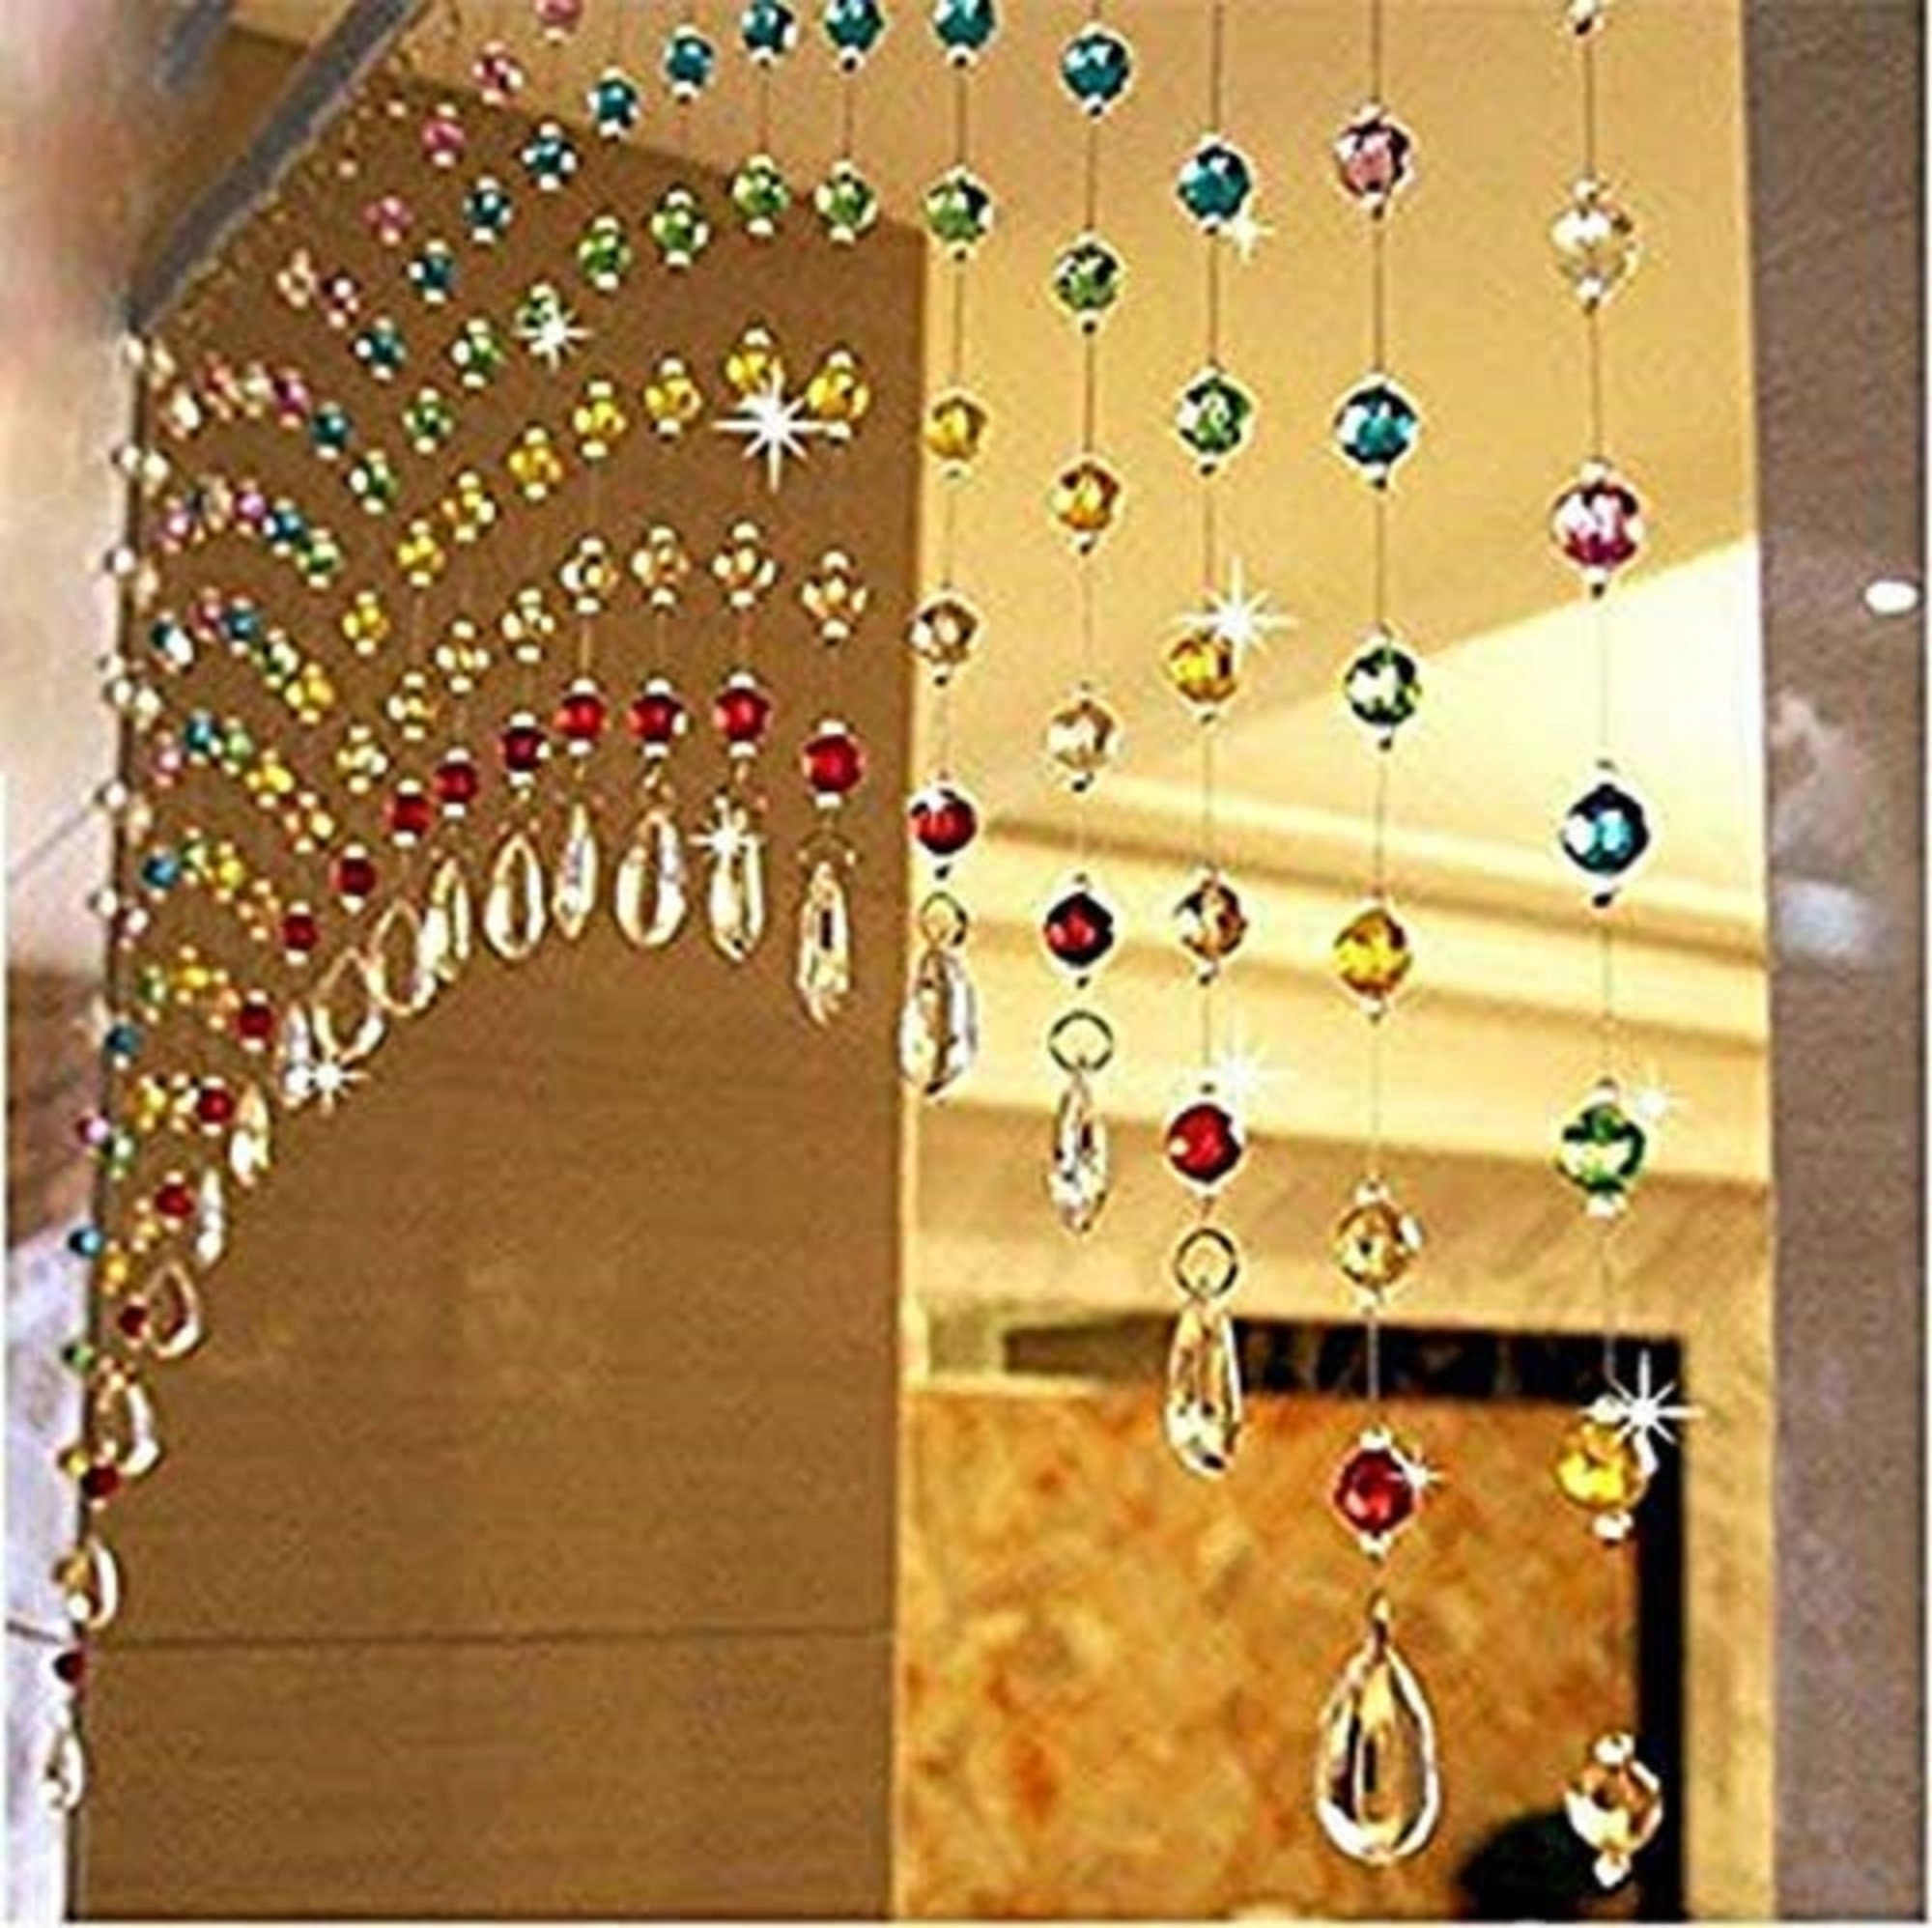 6 Yards/216 Inches/18 Feet Iridescent Bead Curtain Wedding Centerpiece  Acrylic Crystal Diamond Cut Tier/chandelier Shades/bling Curtains 